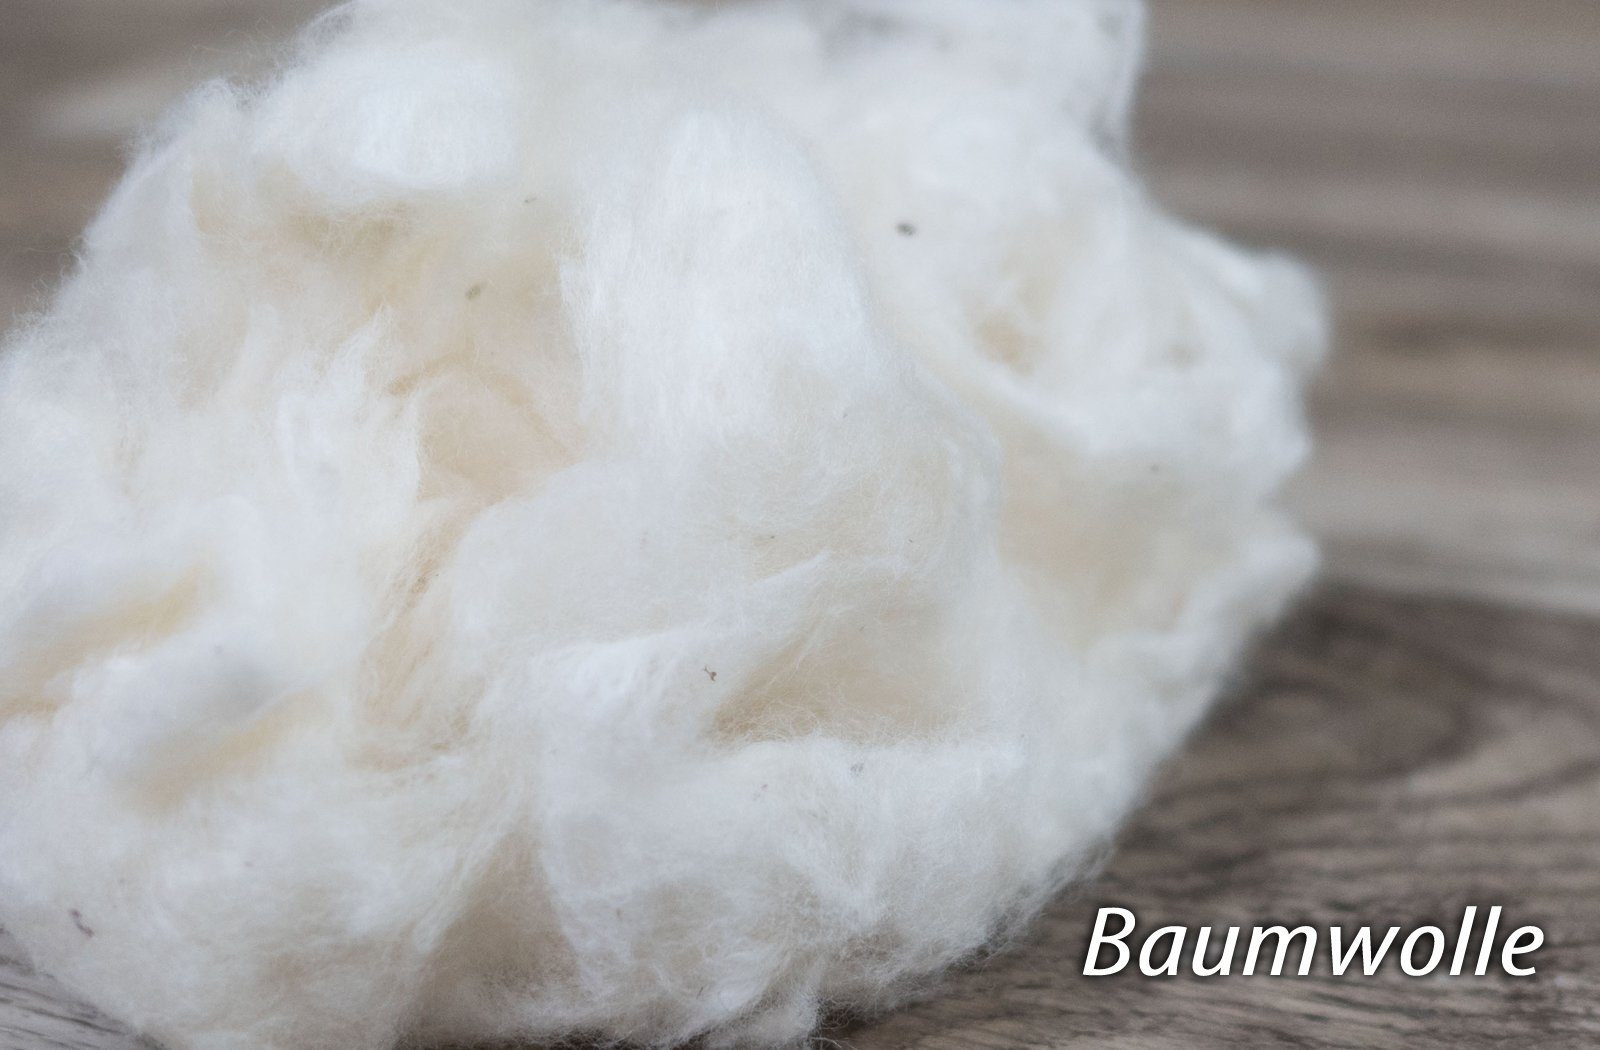 Baumwollbettdecke, Nancy, franknatur, leichte Bezug: kbA, 100% Baumwolle Baumwolle Füllung: kbA, Sommer-Bettdecke 100